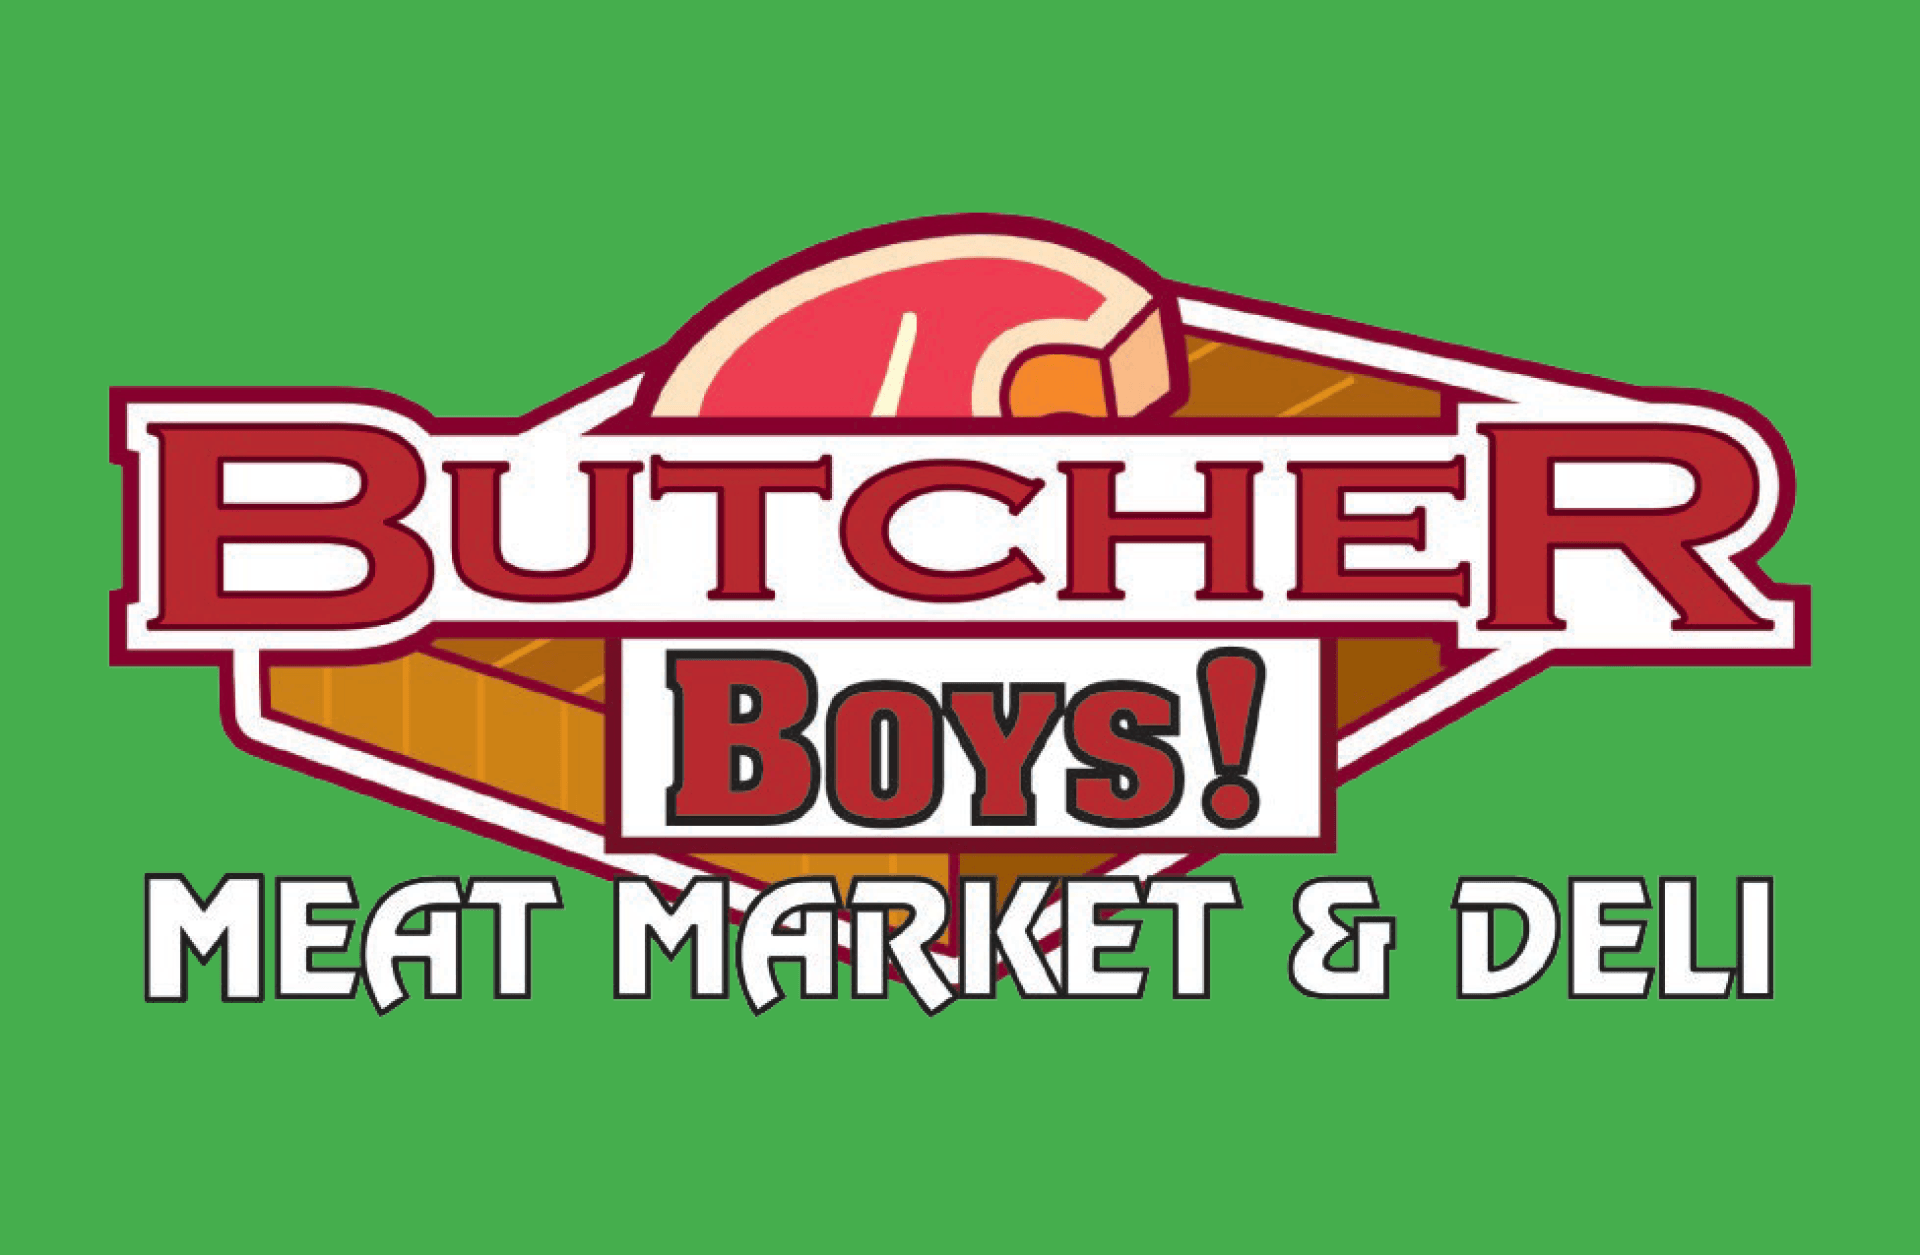 Butcher Boys Meat Market & Deli